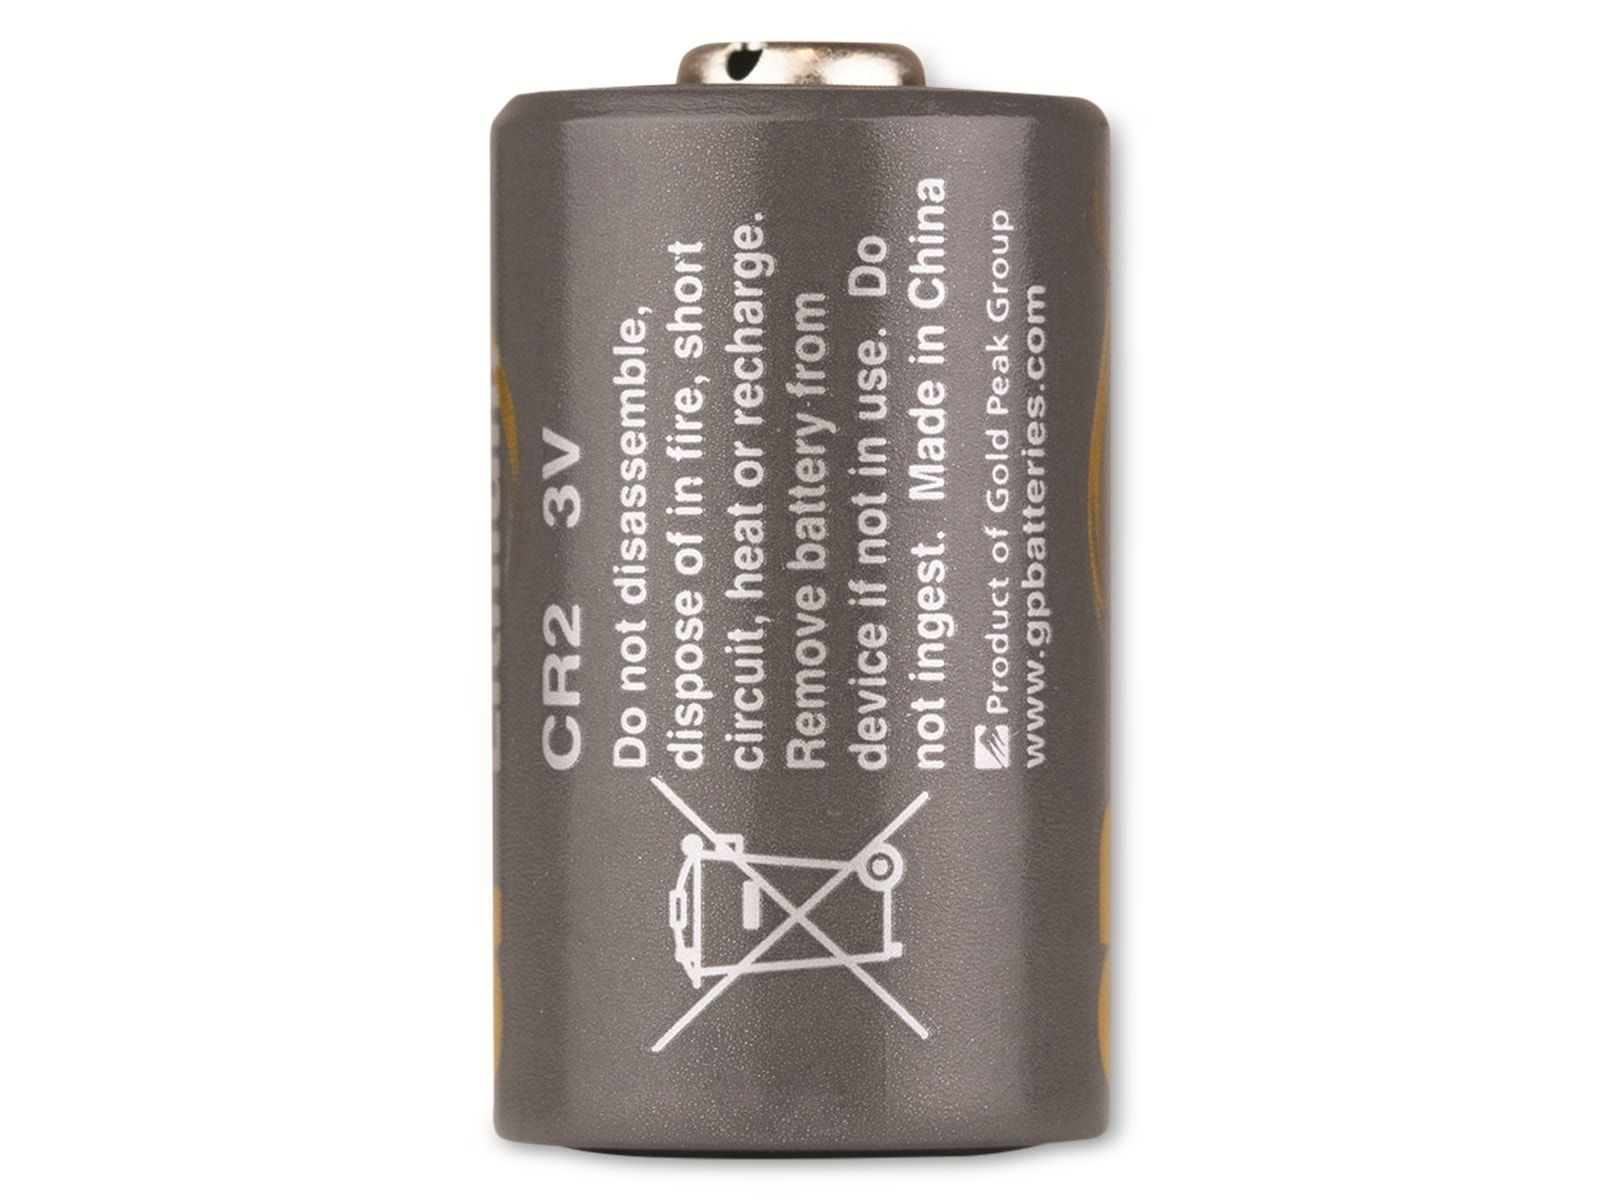 CR2, GP 10 3V, Lithium Lithium-Batterie Batterie Stück